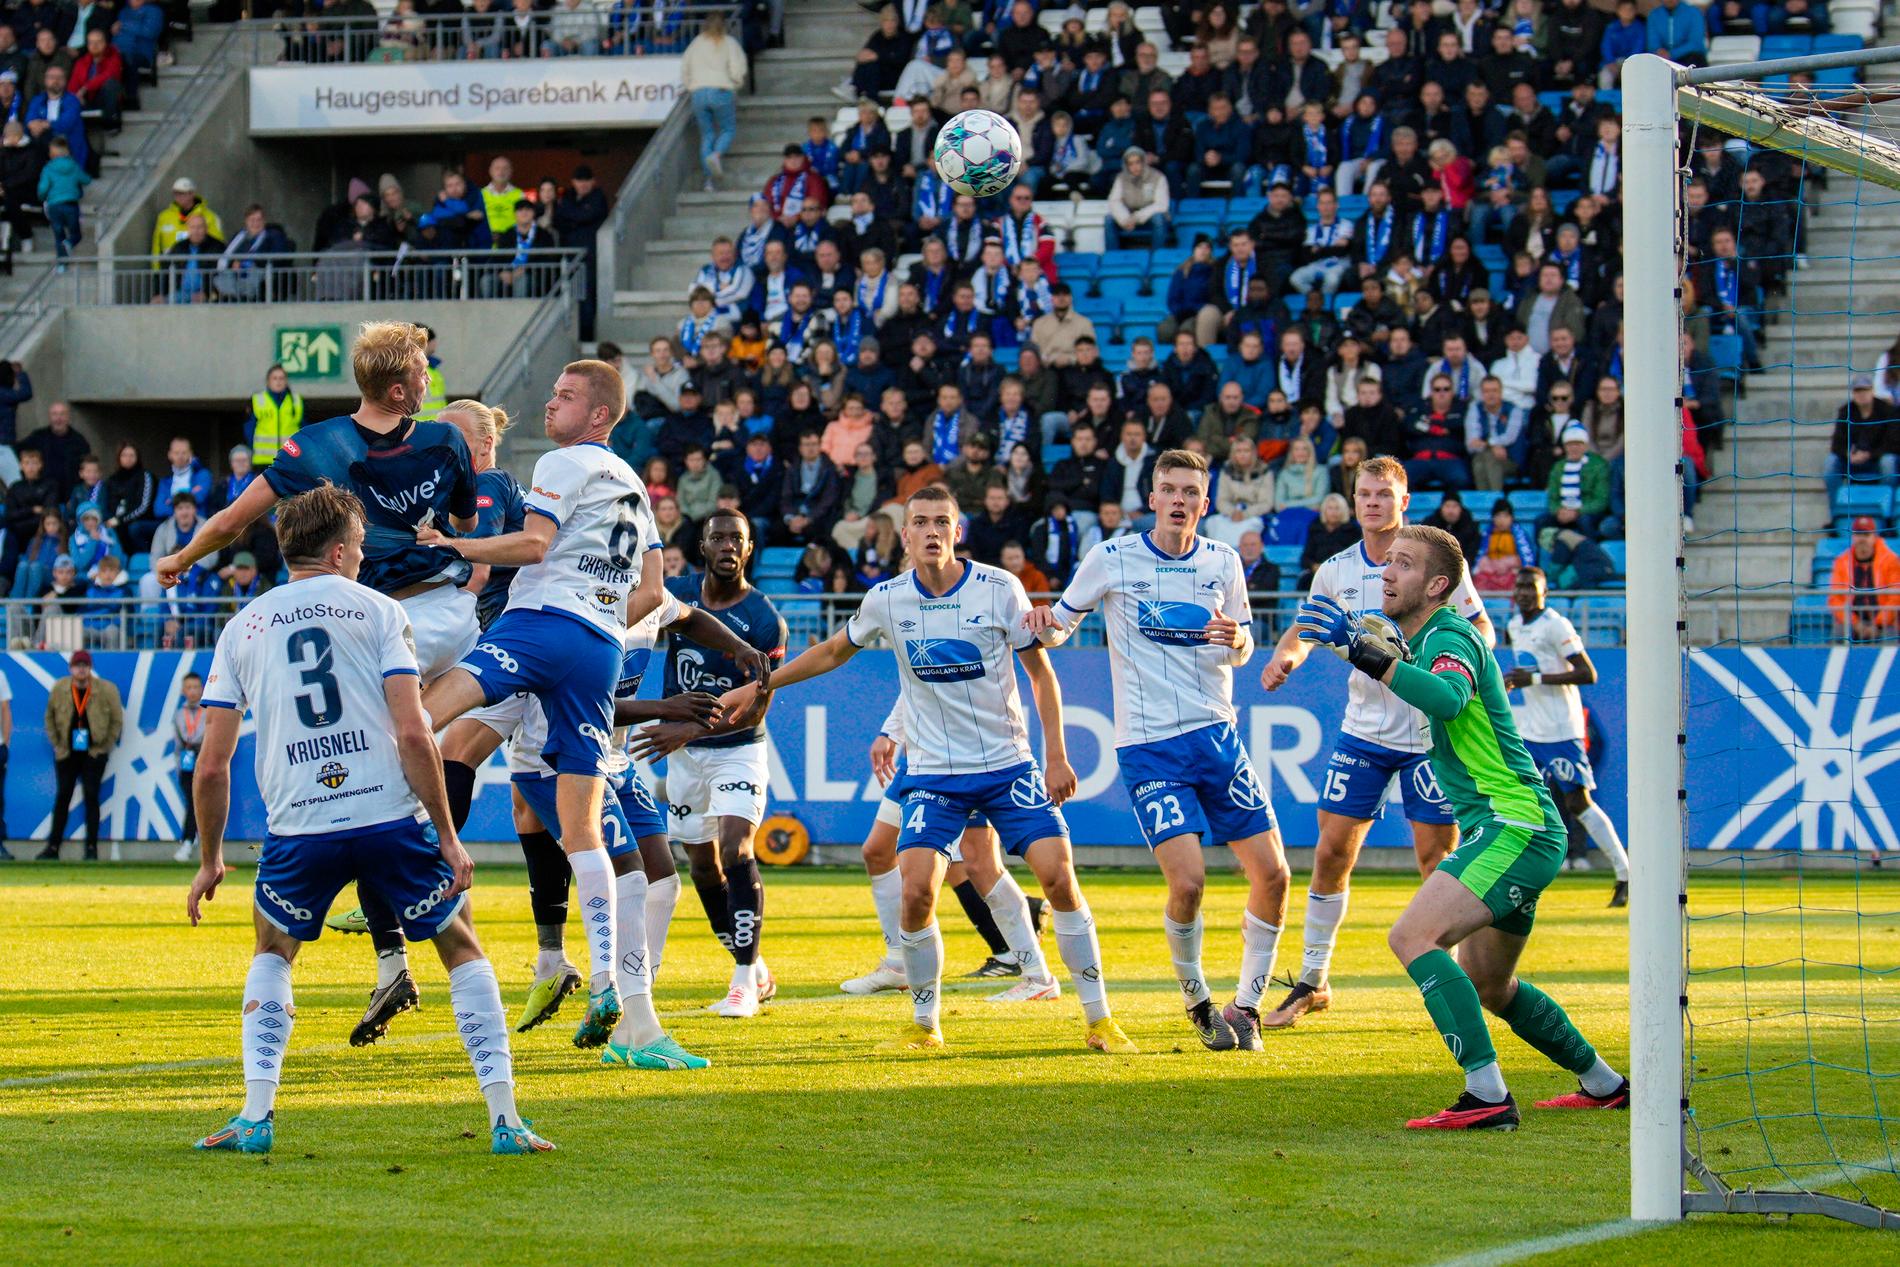 Viking Beats Haugesund 2-0: Sondre Langås Scores First Goal in Jersey